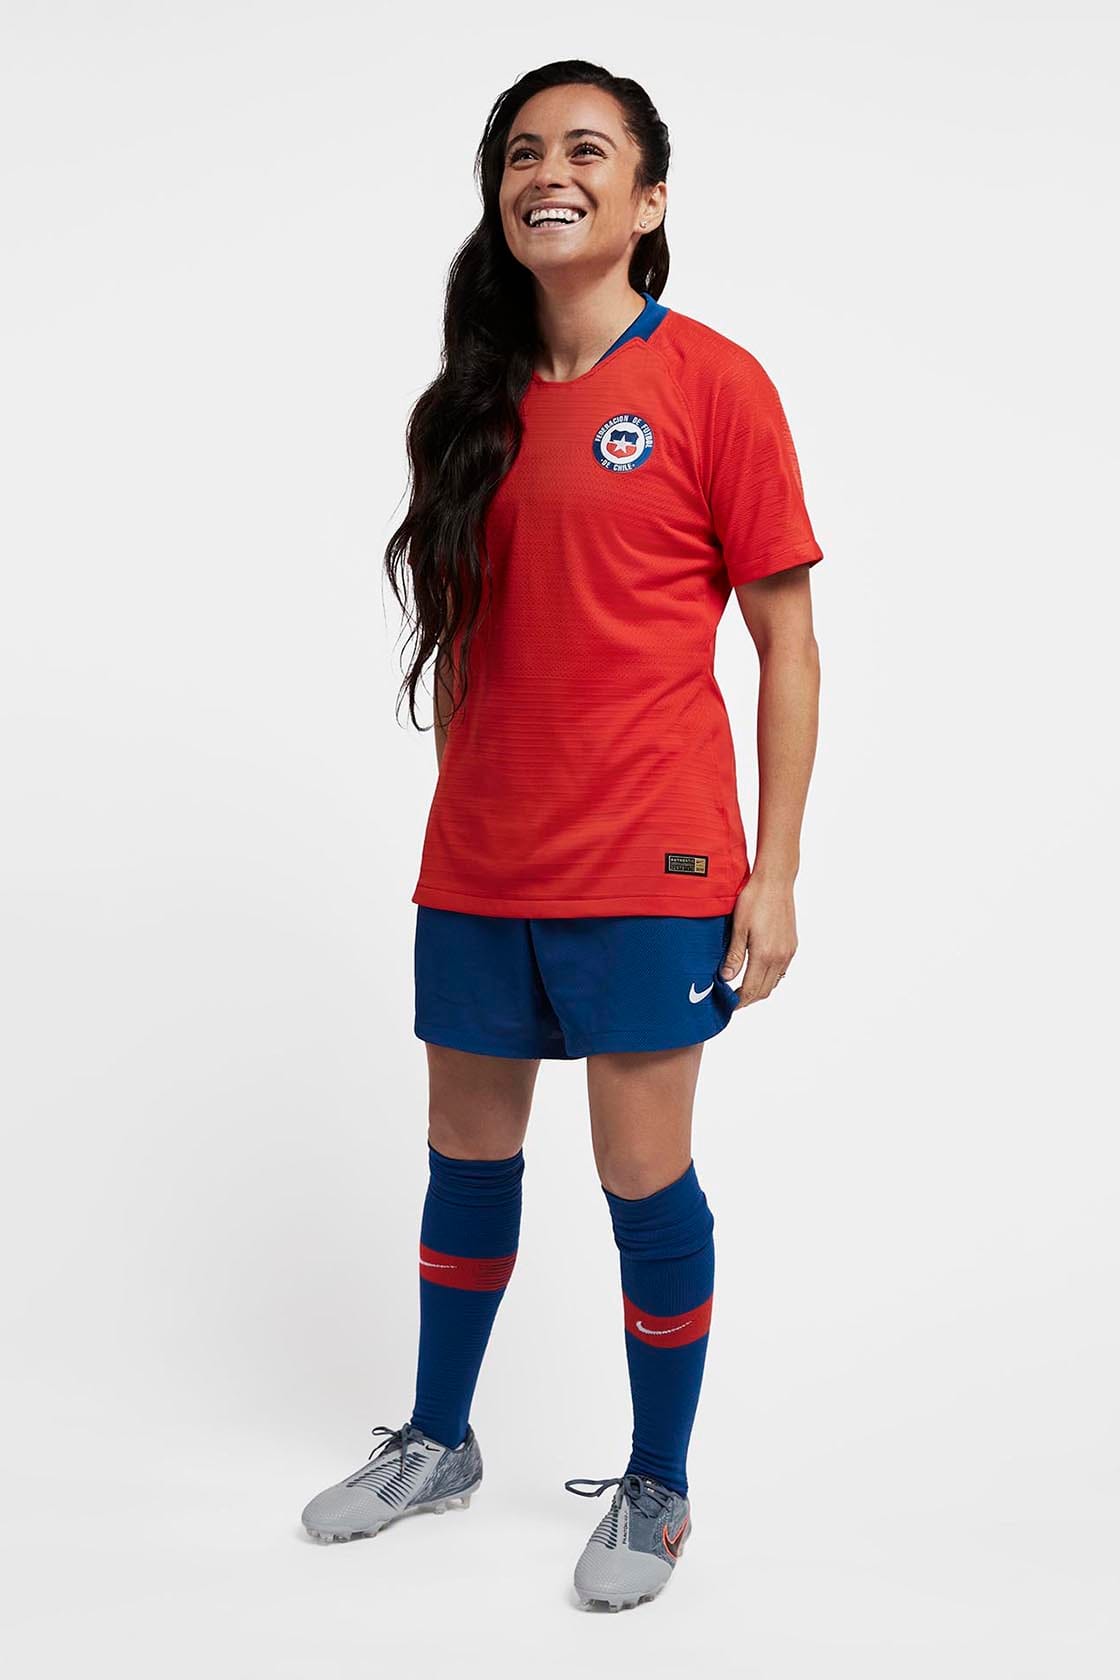 women world cup kits